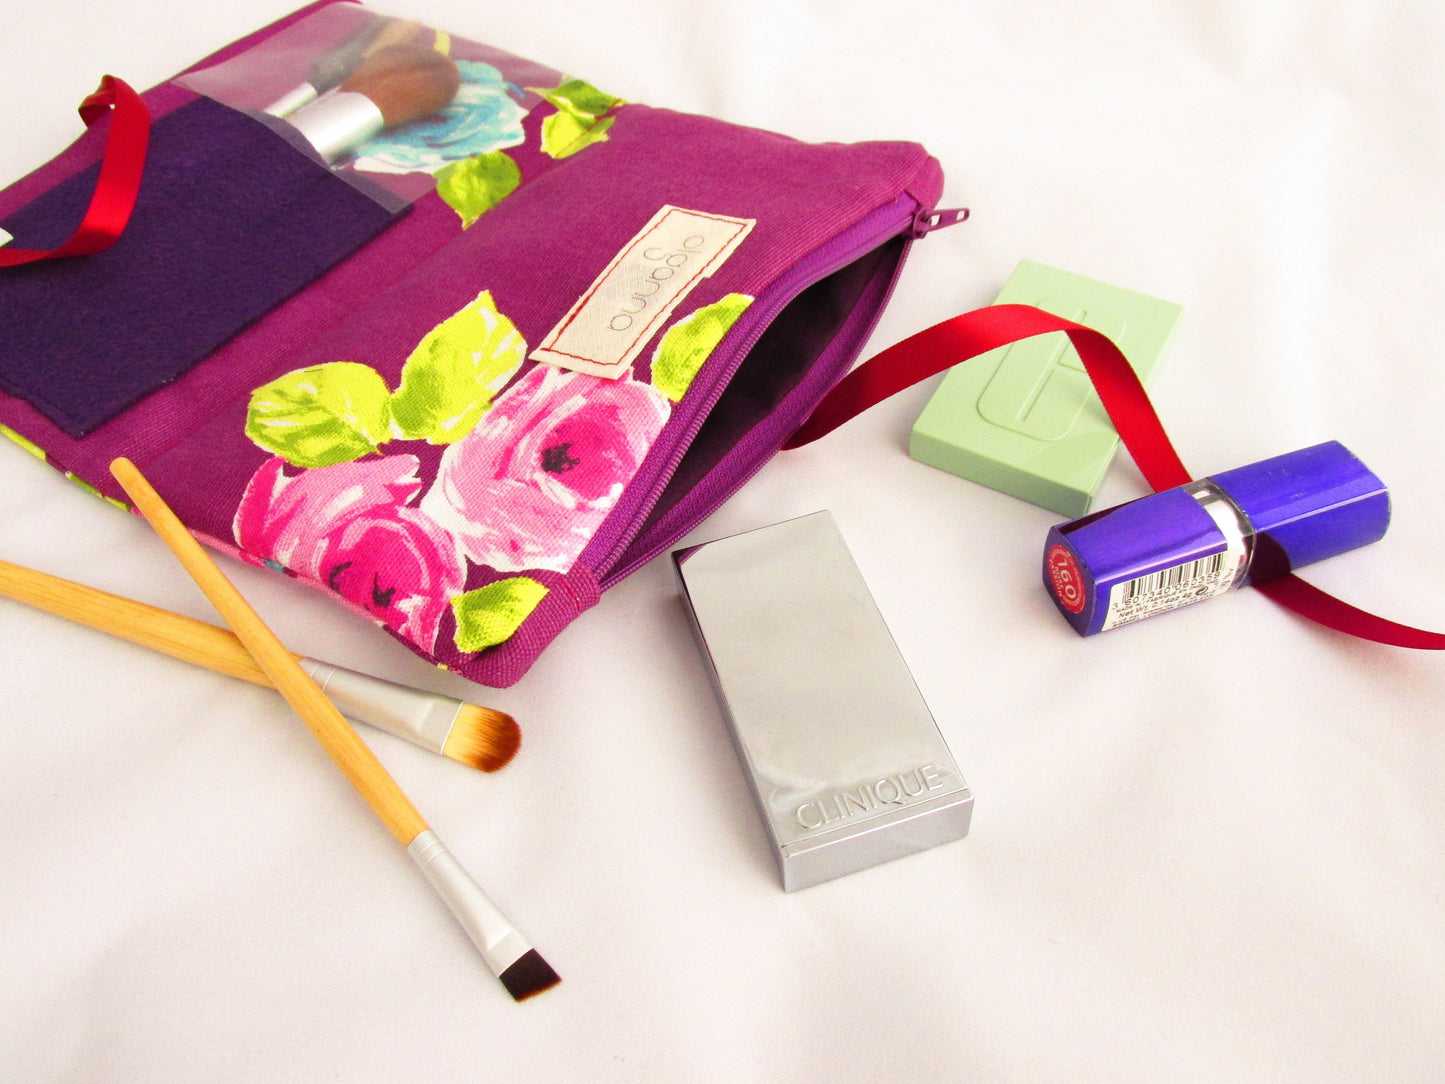 Personalised Make Up Wrap with zip pocket and brushes pocket - Olganna